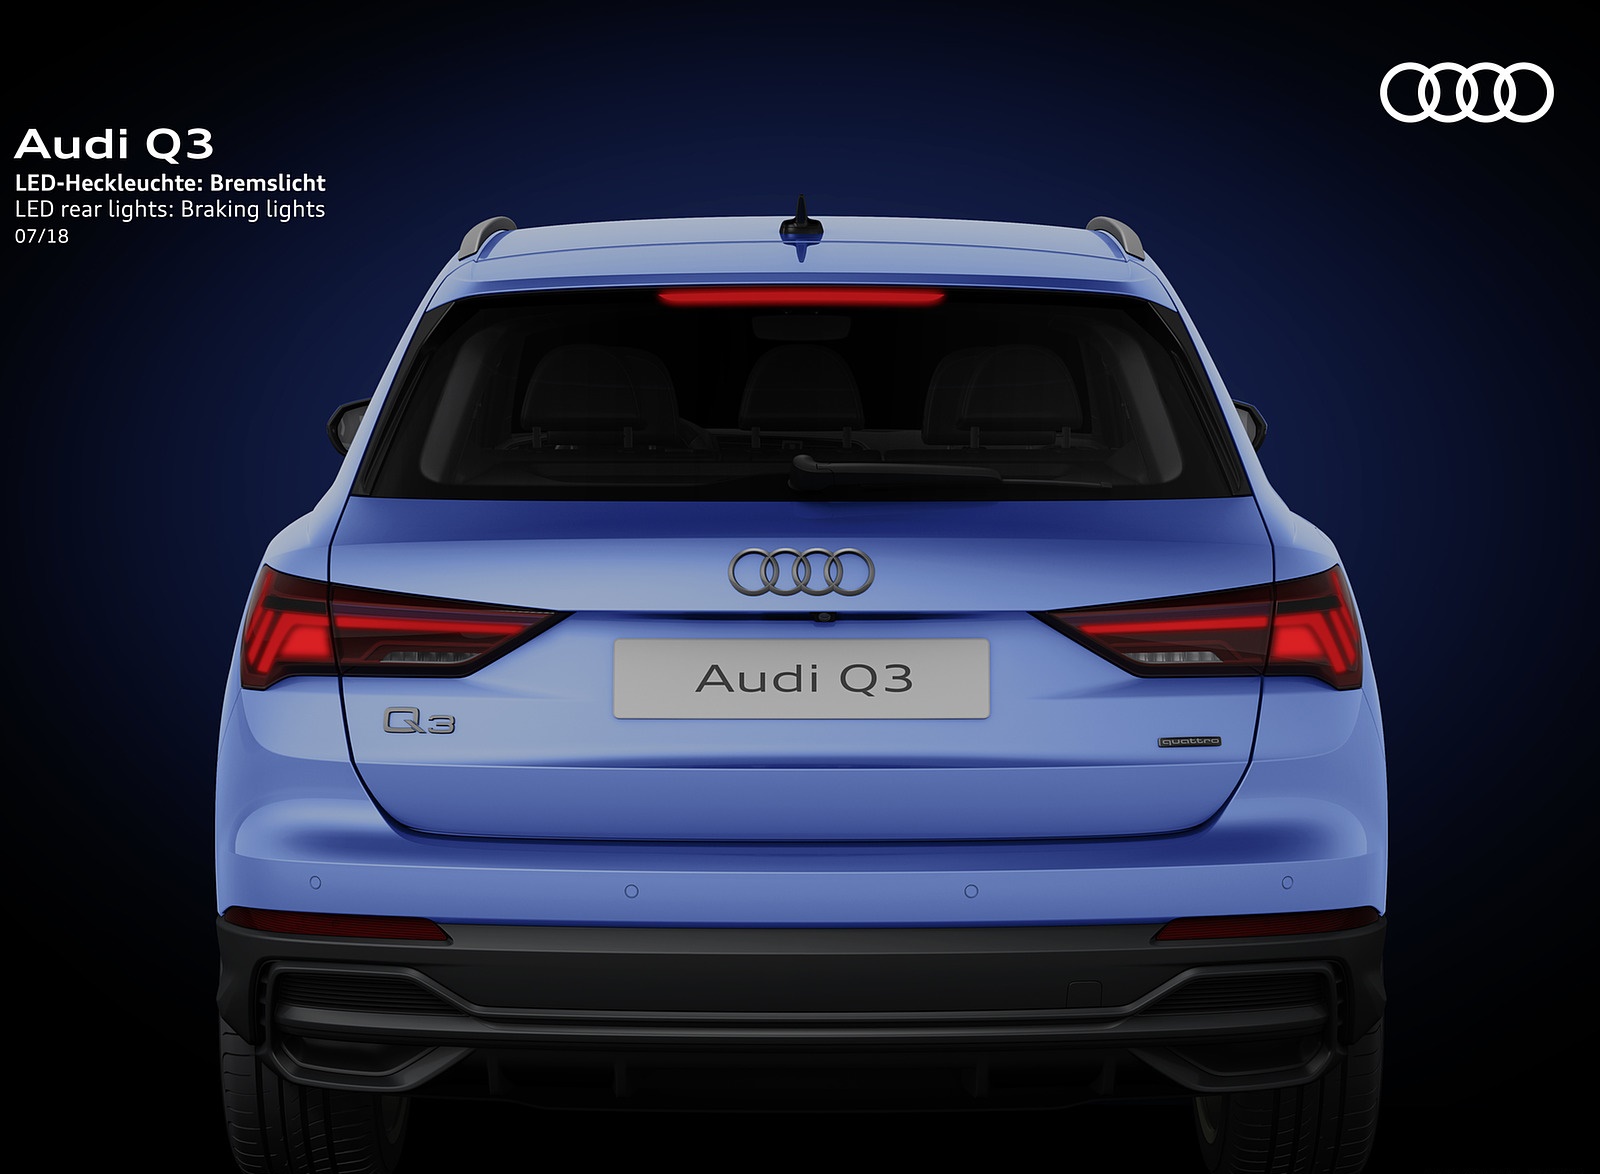 2019 Audi Q3 LED rear lights Bracking lights Wallpapers #24 of 40